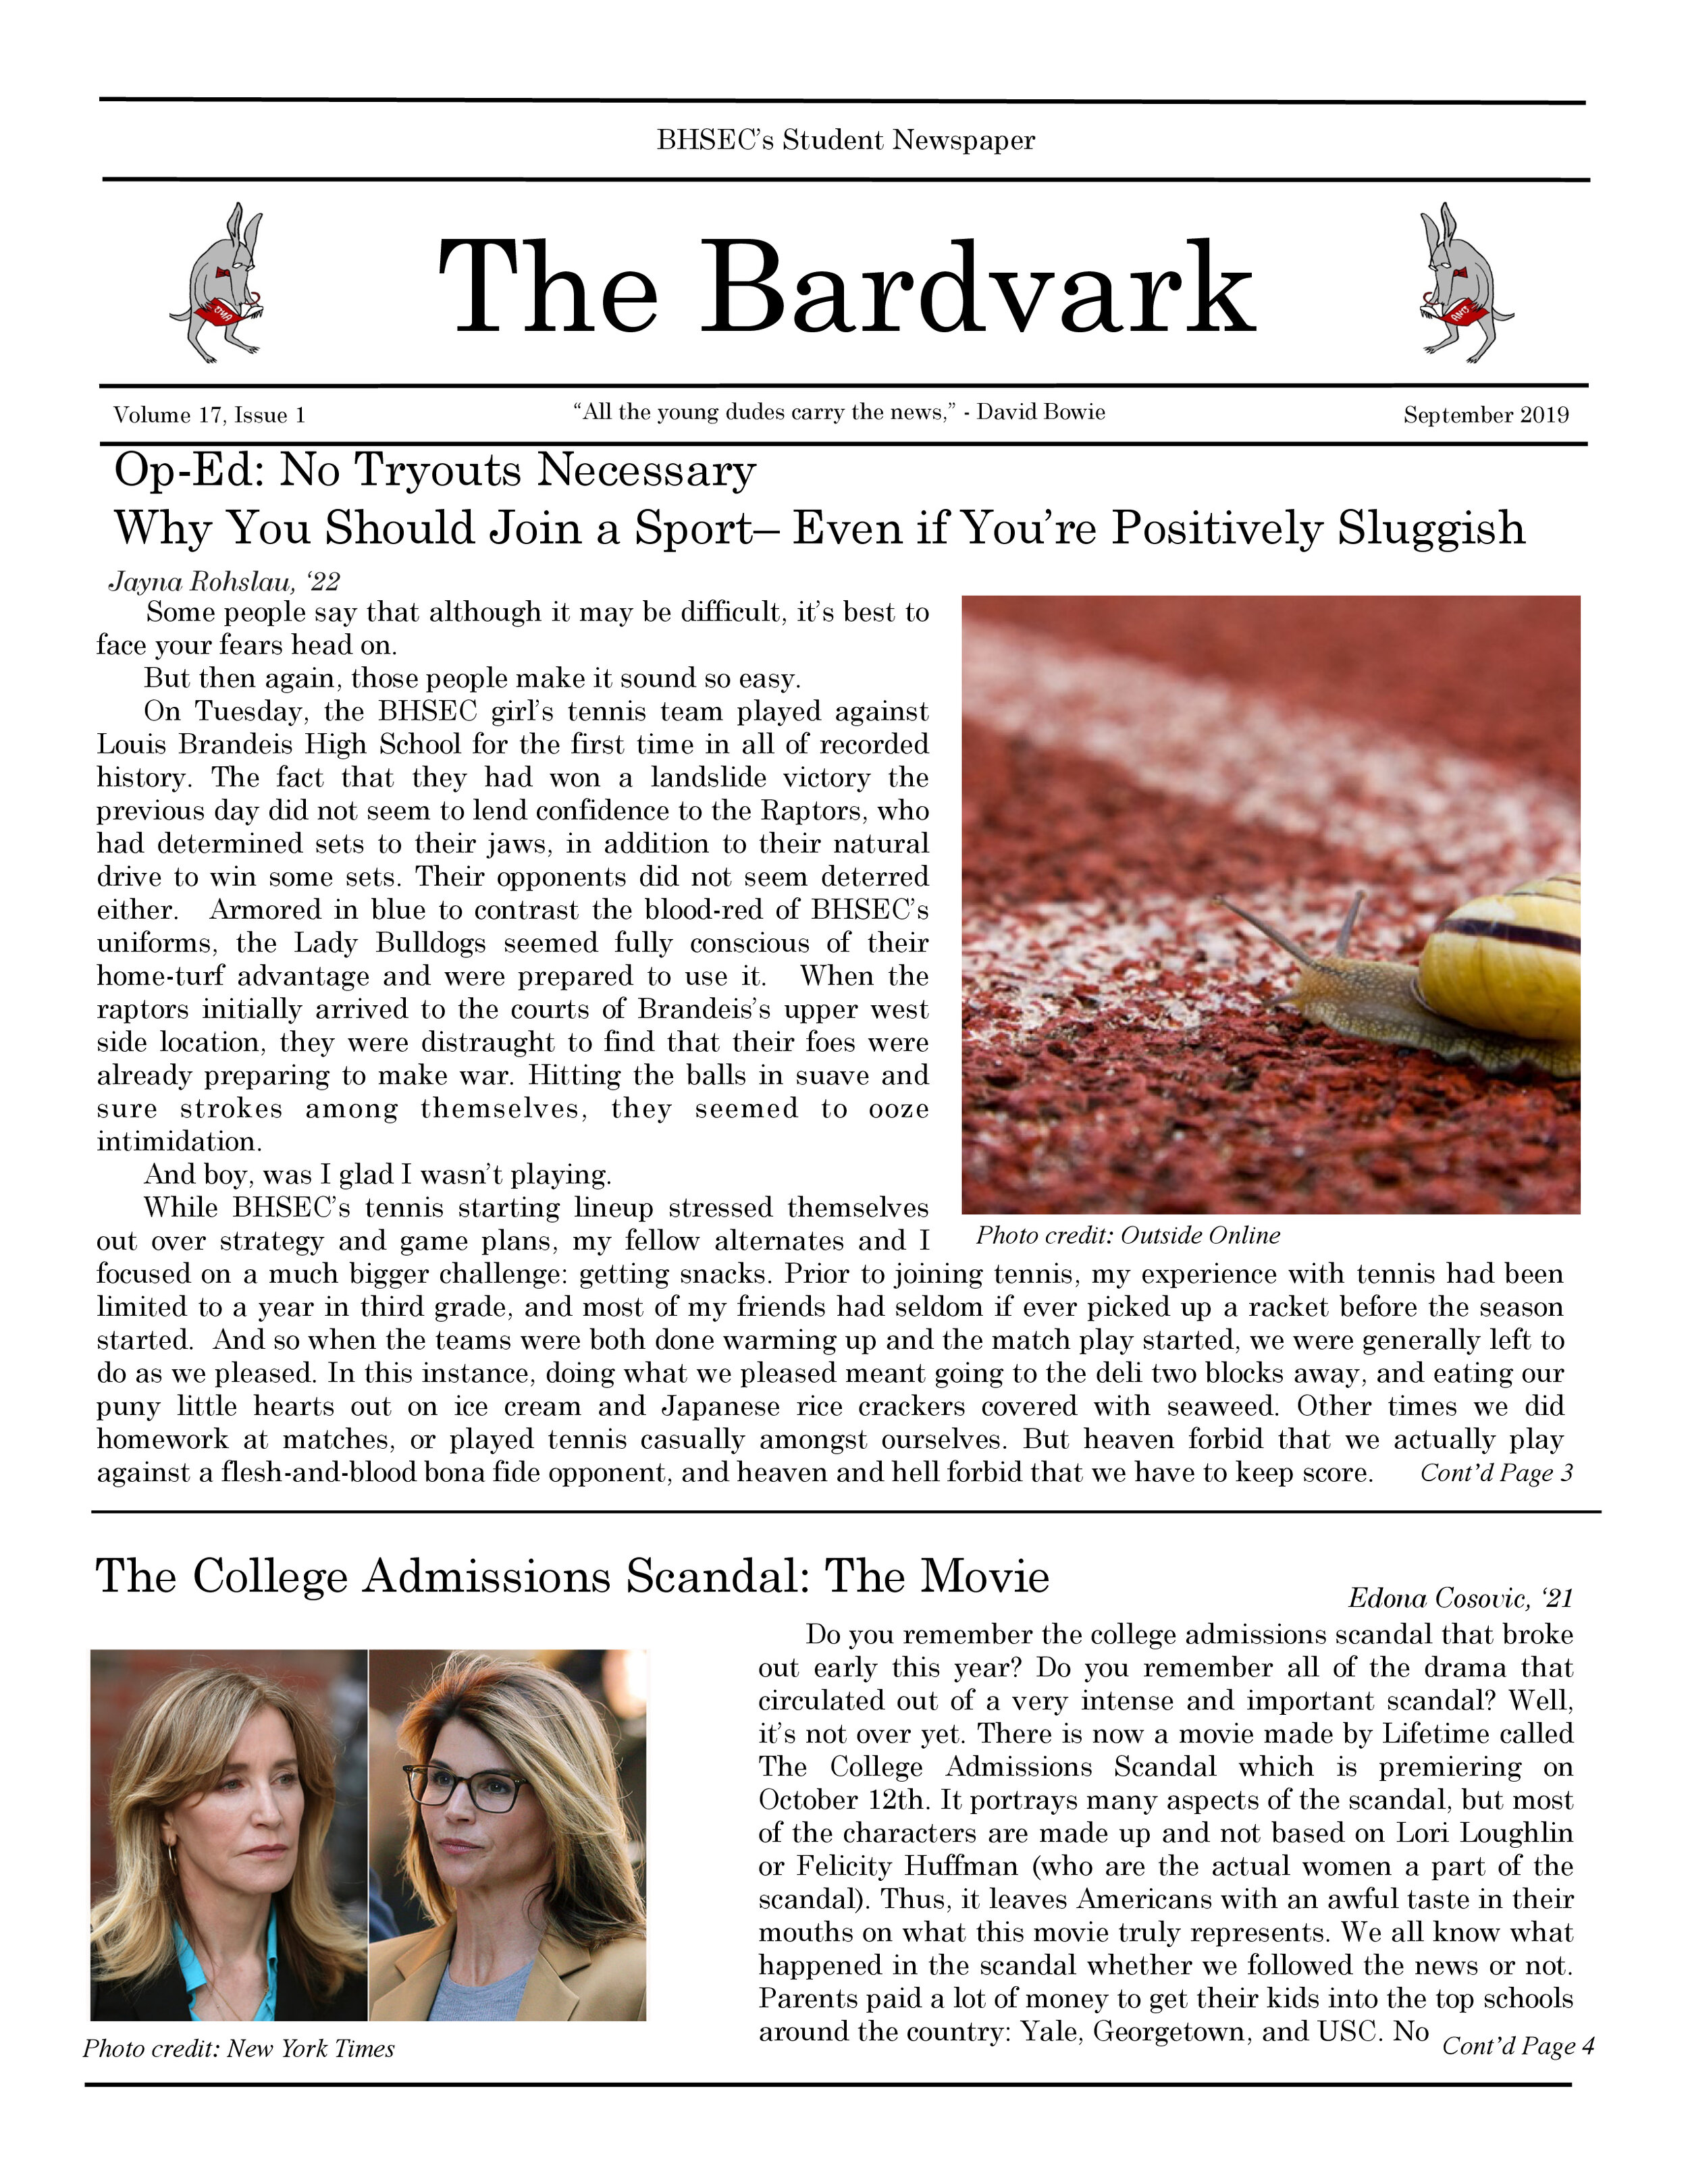 Bardvark Vol 17.1 2-1.jpg